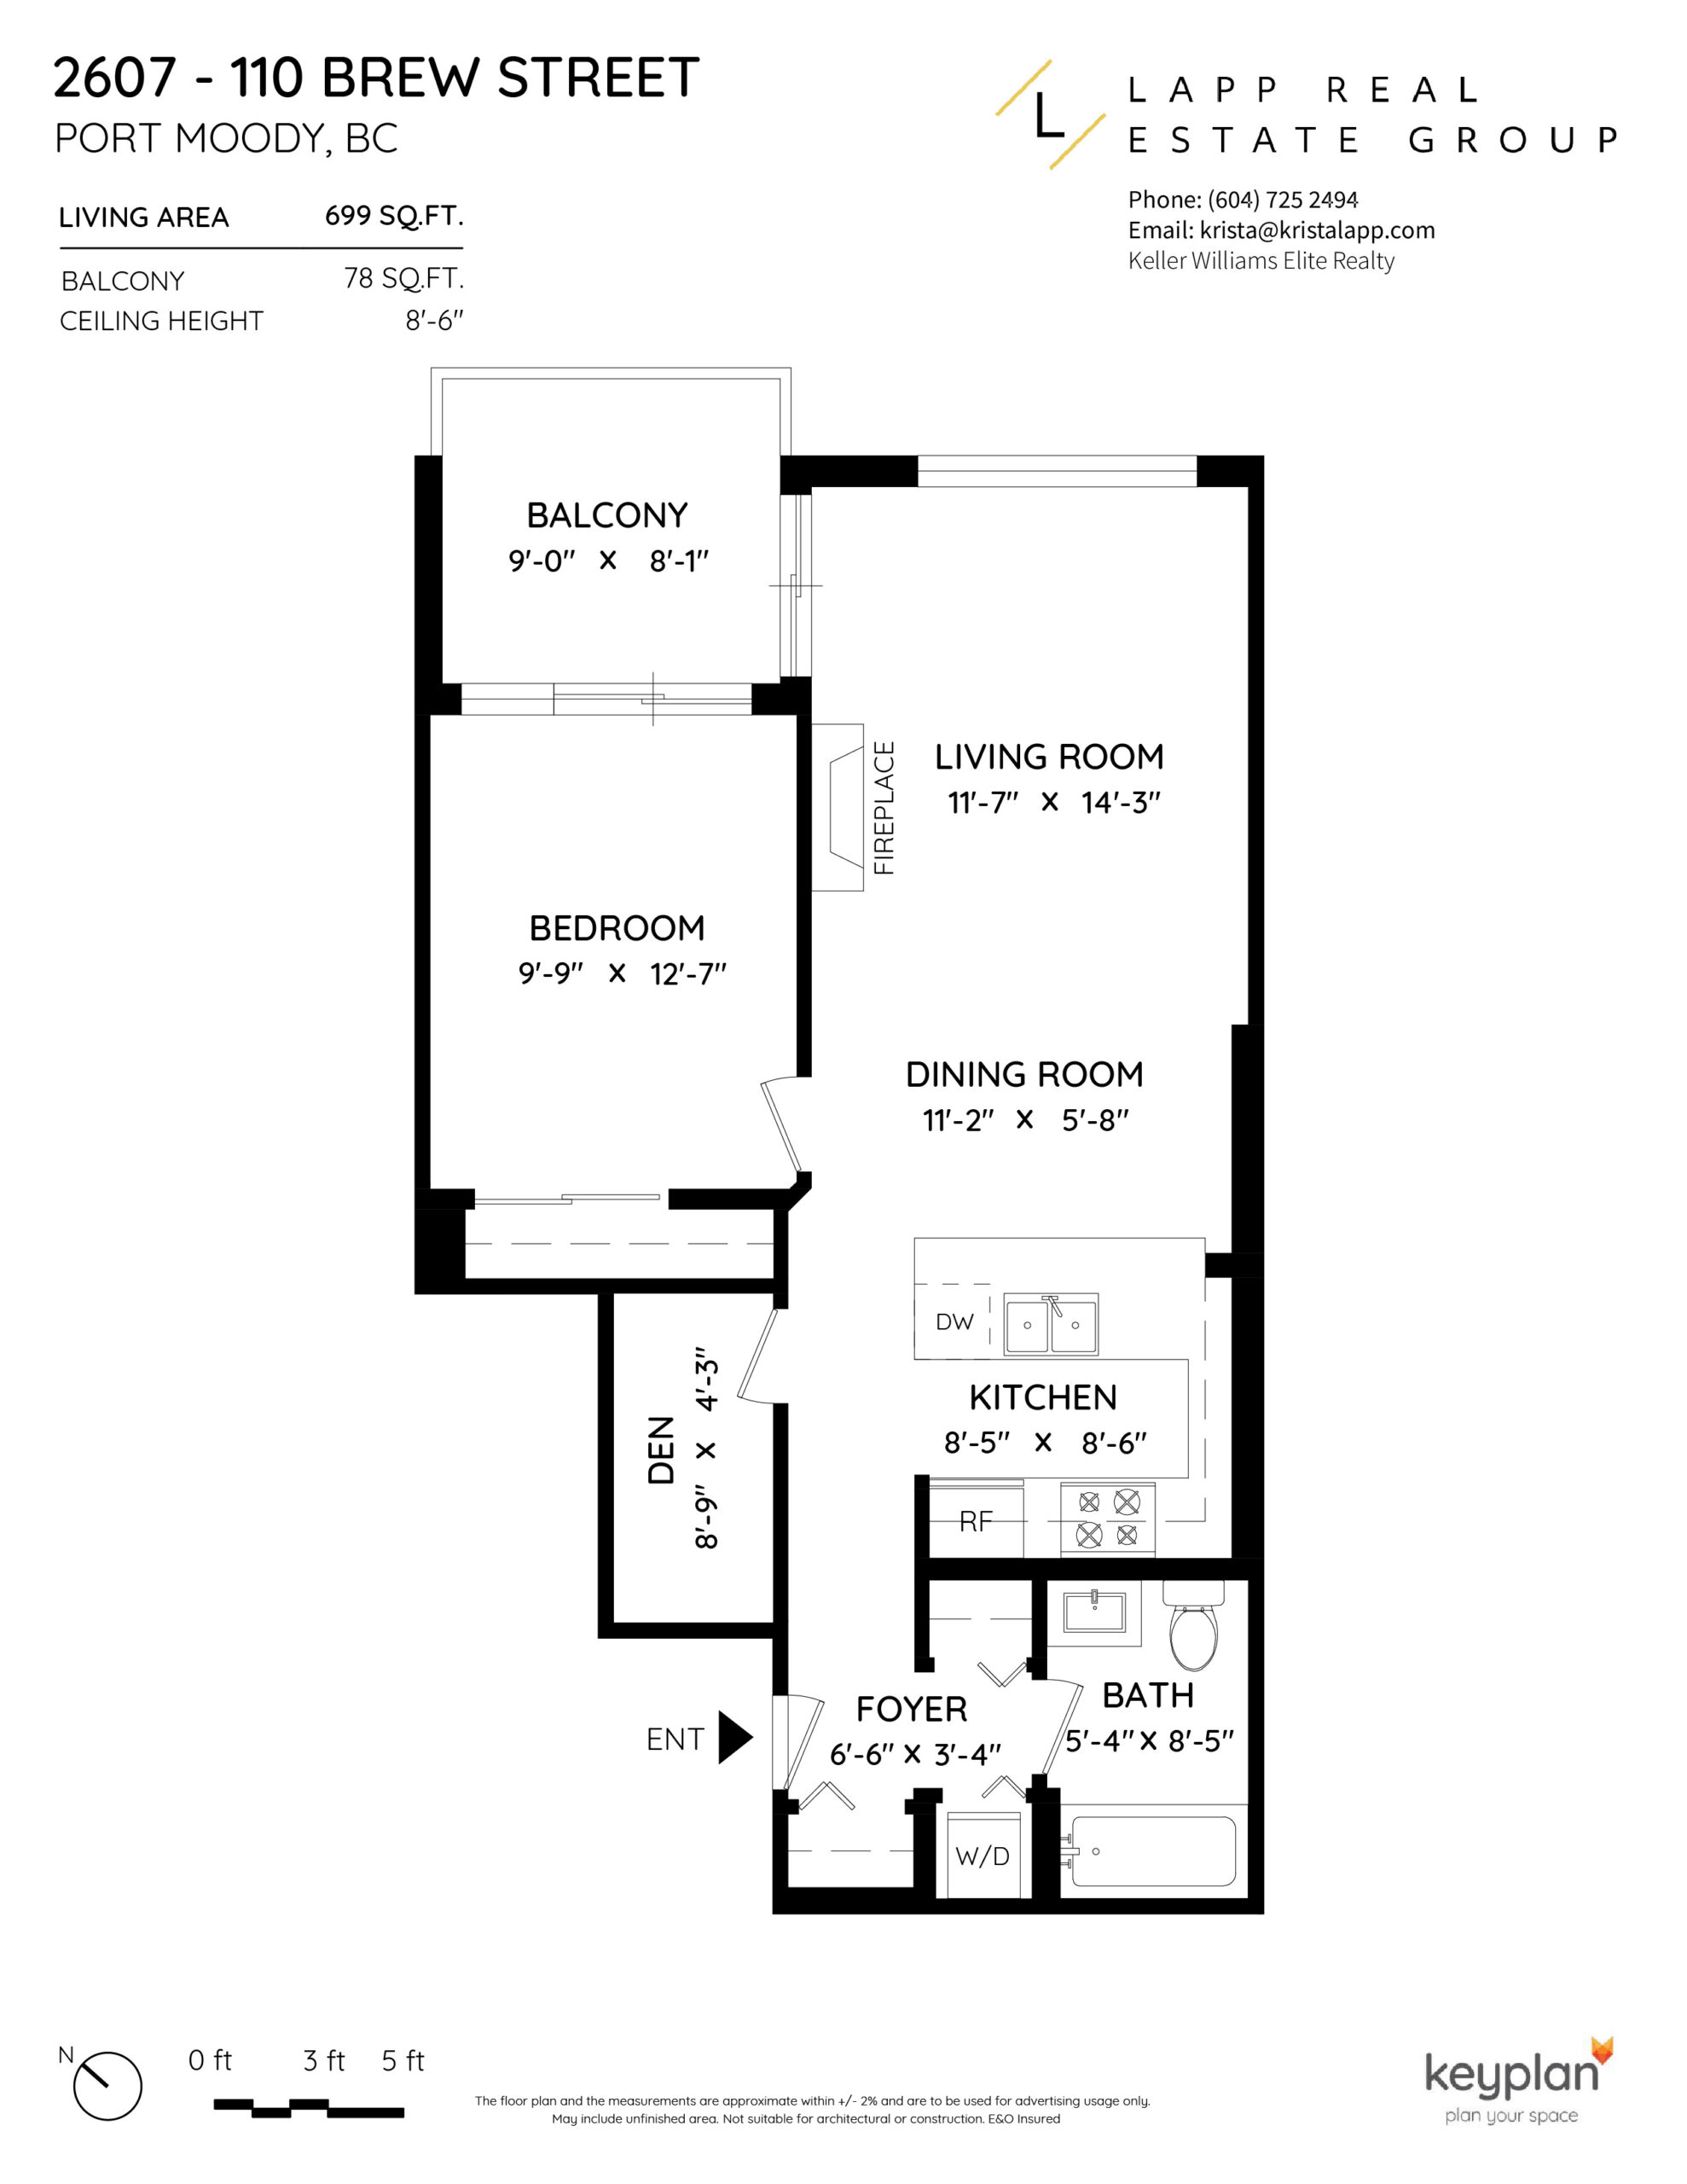 Krista Lapp #2607 110 Brew Street Port Moody Condo Floorplan -Layout2-01